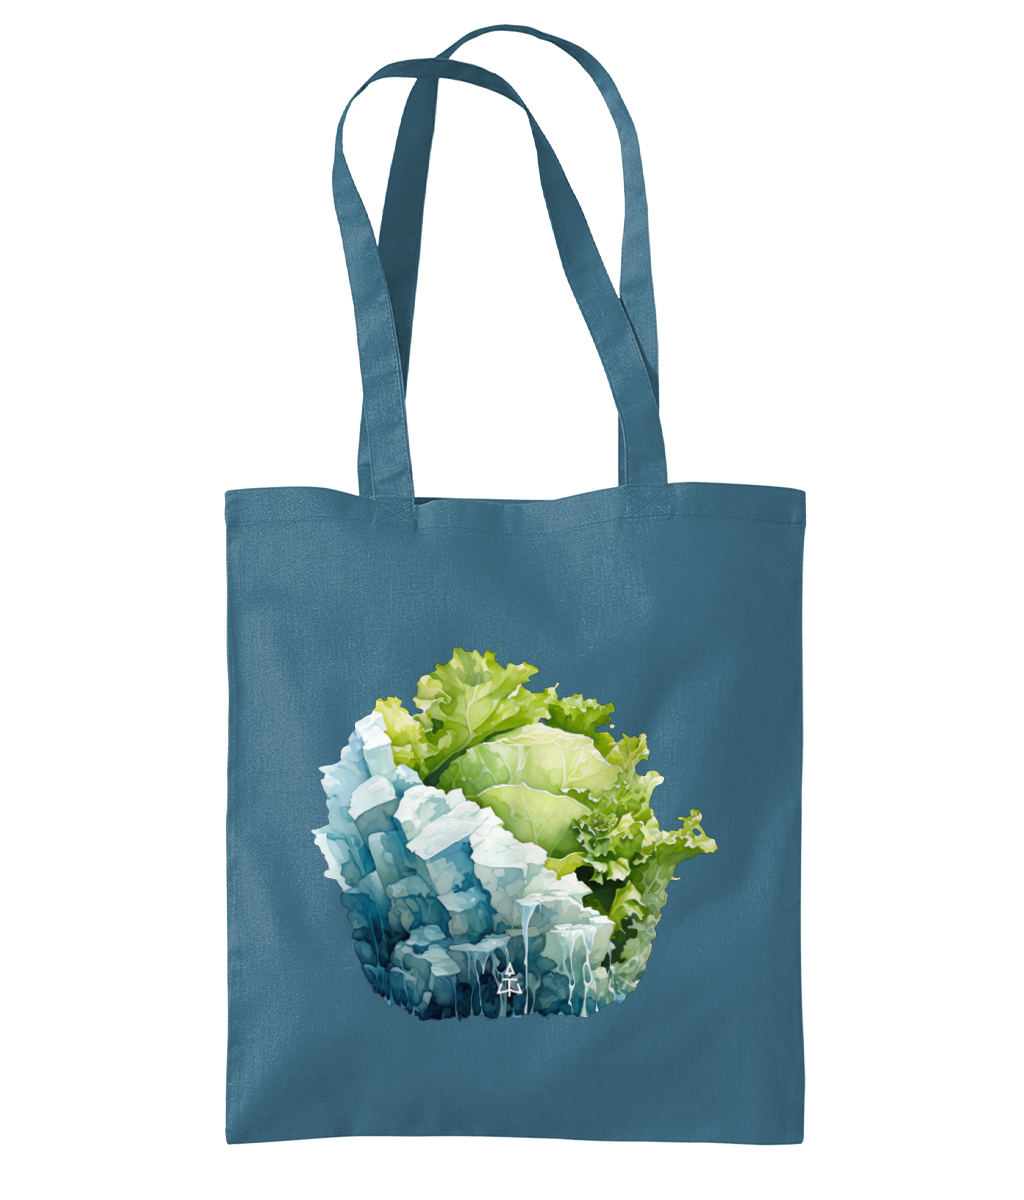 Iceberg Lettuce Graphic Tote Bag